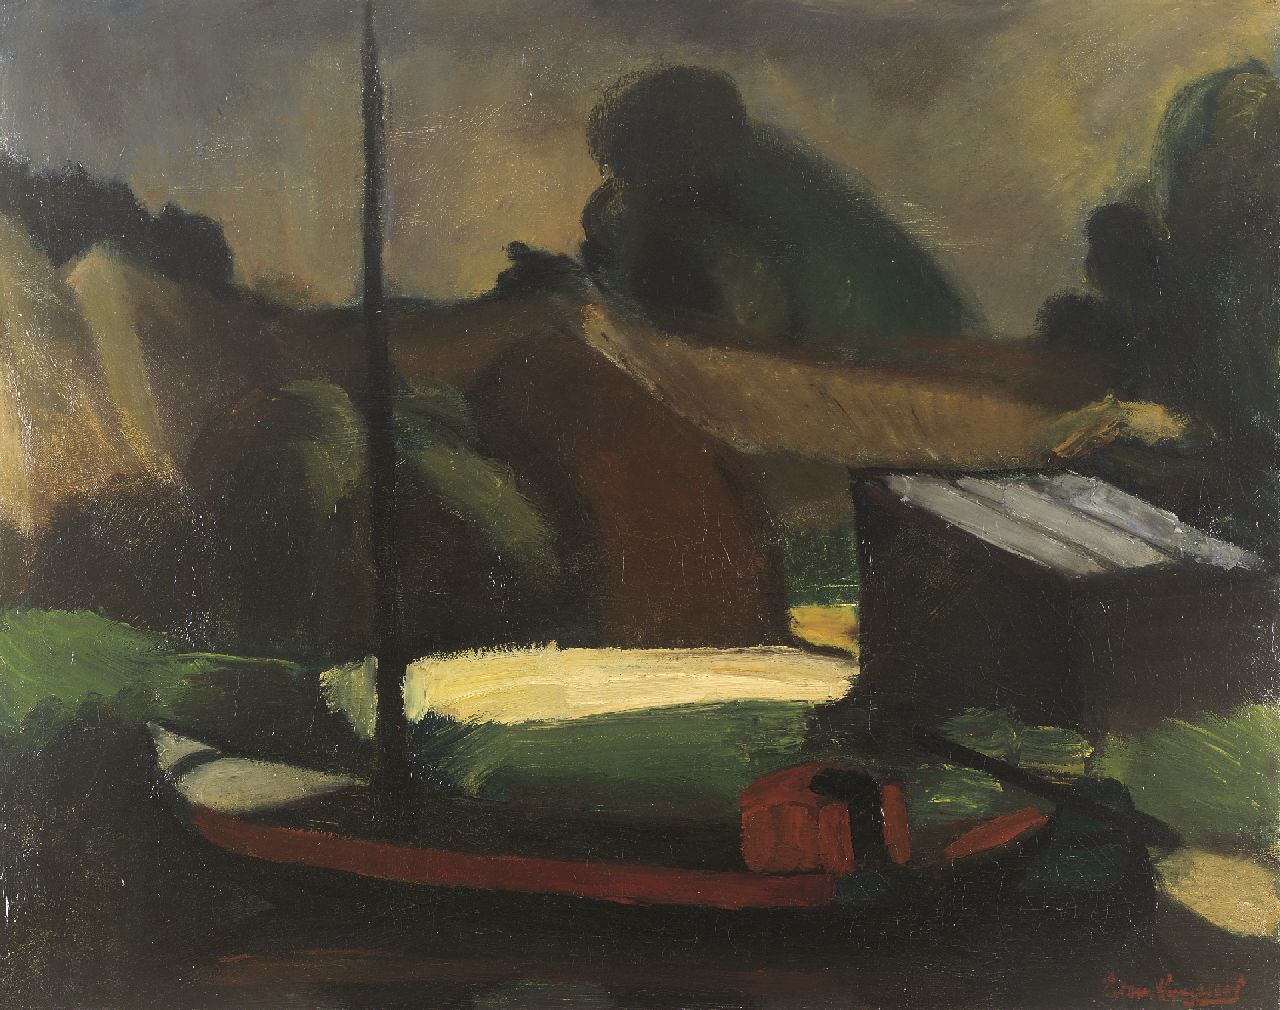 Wijngaerdt P.T. van | Petrus Theodorus 'Piet' van Wijngaerdt, Boat by a barn, Öl auf Leinwand 80,4 x 101,4 cm, signed l.r. und painted ca. 1918